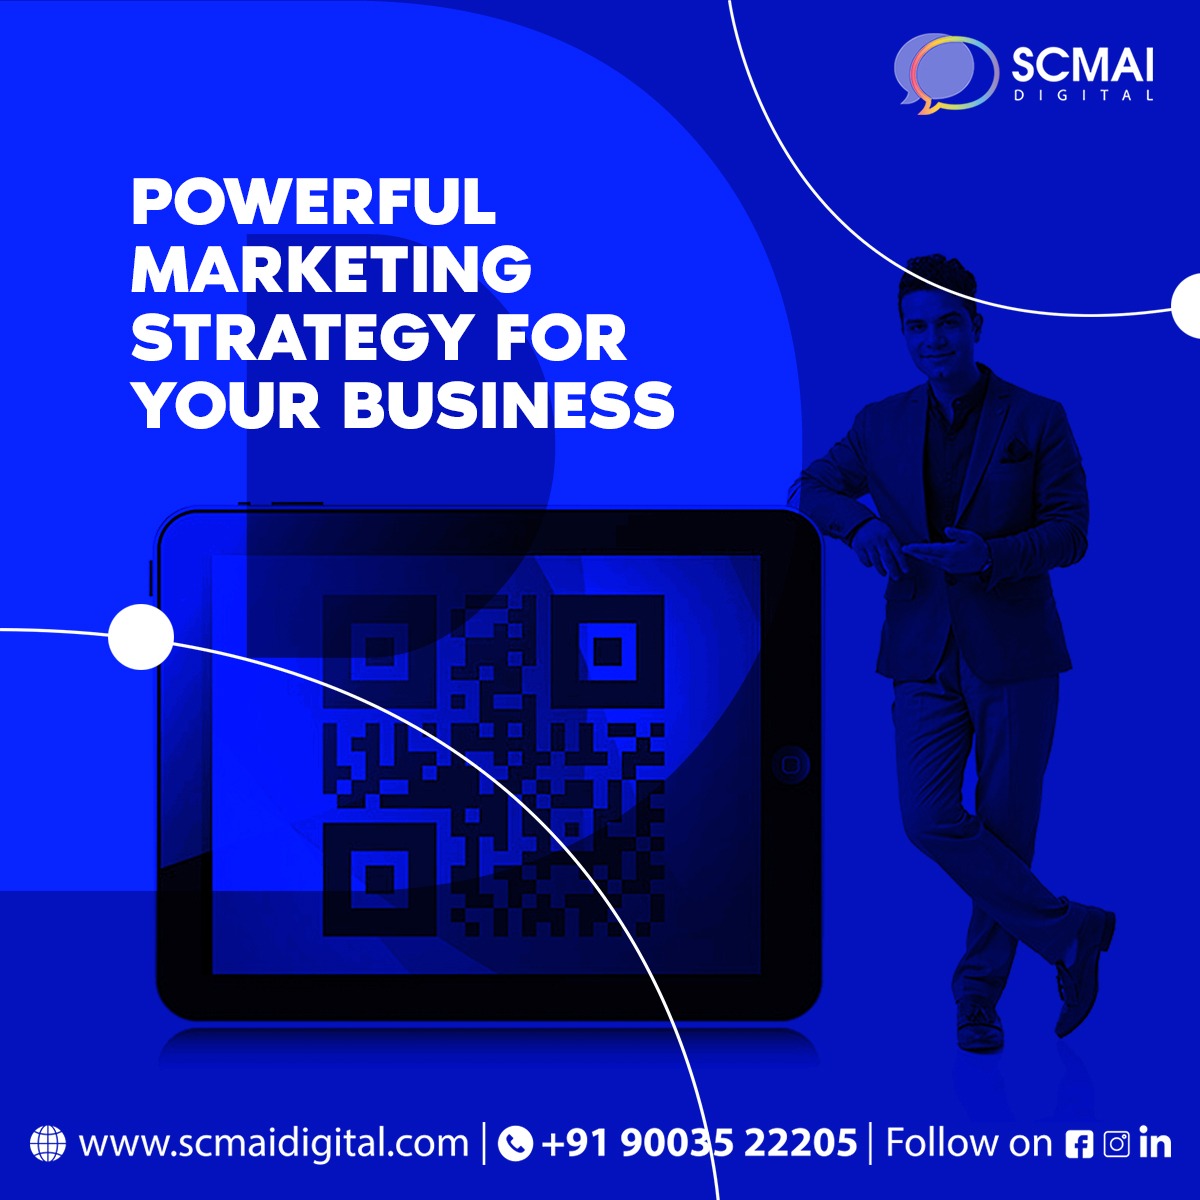 scmai is a leading digital marketing company in tamilnadu